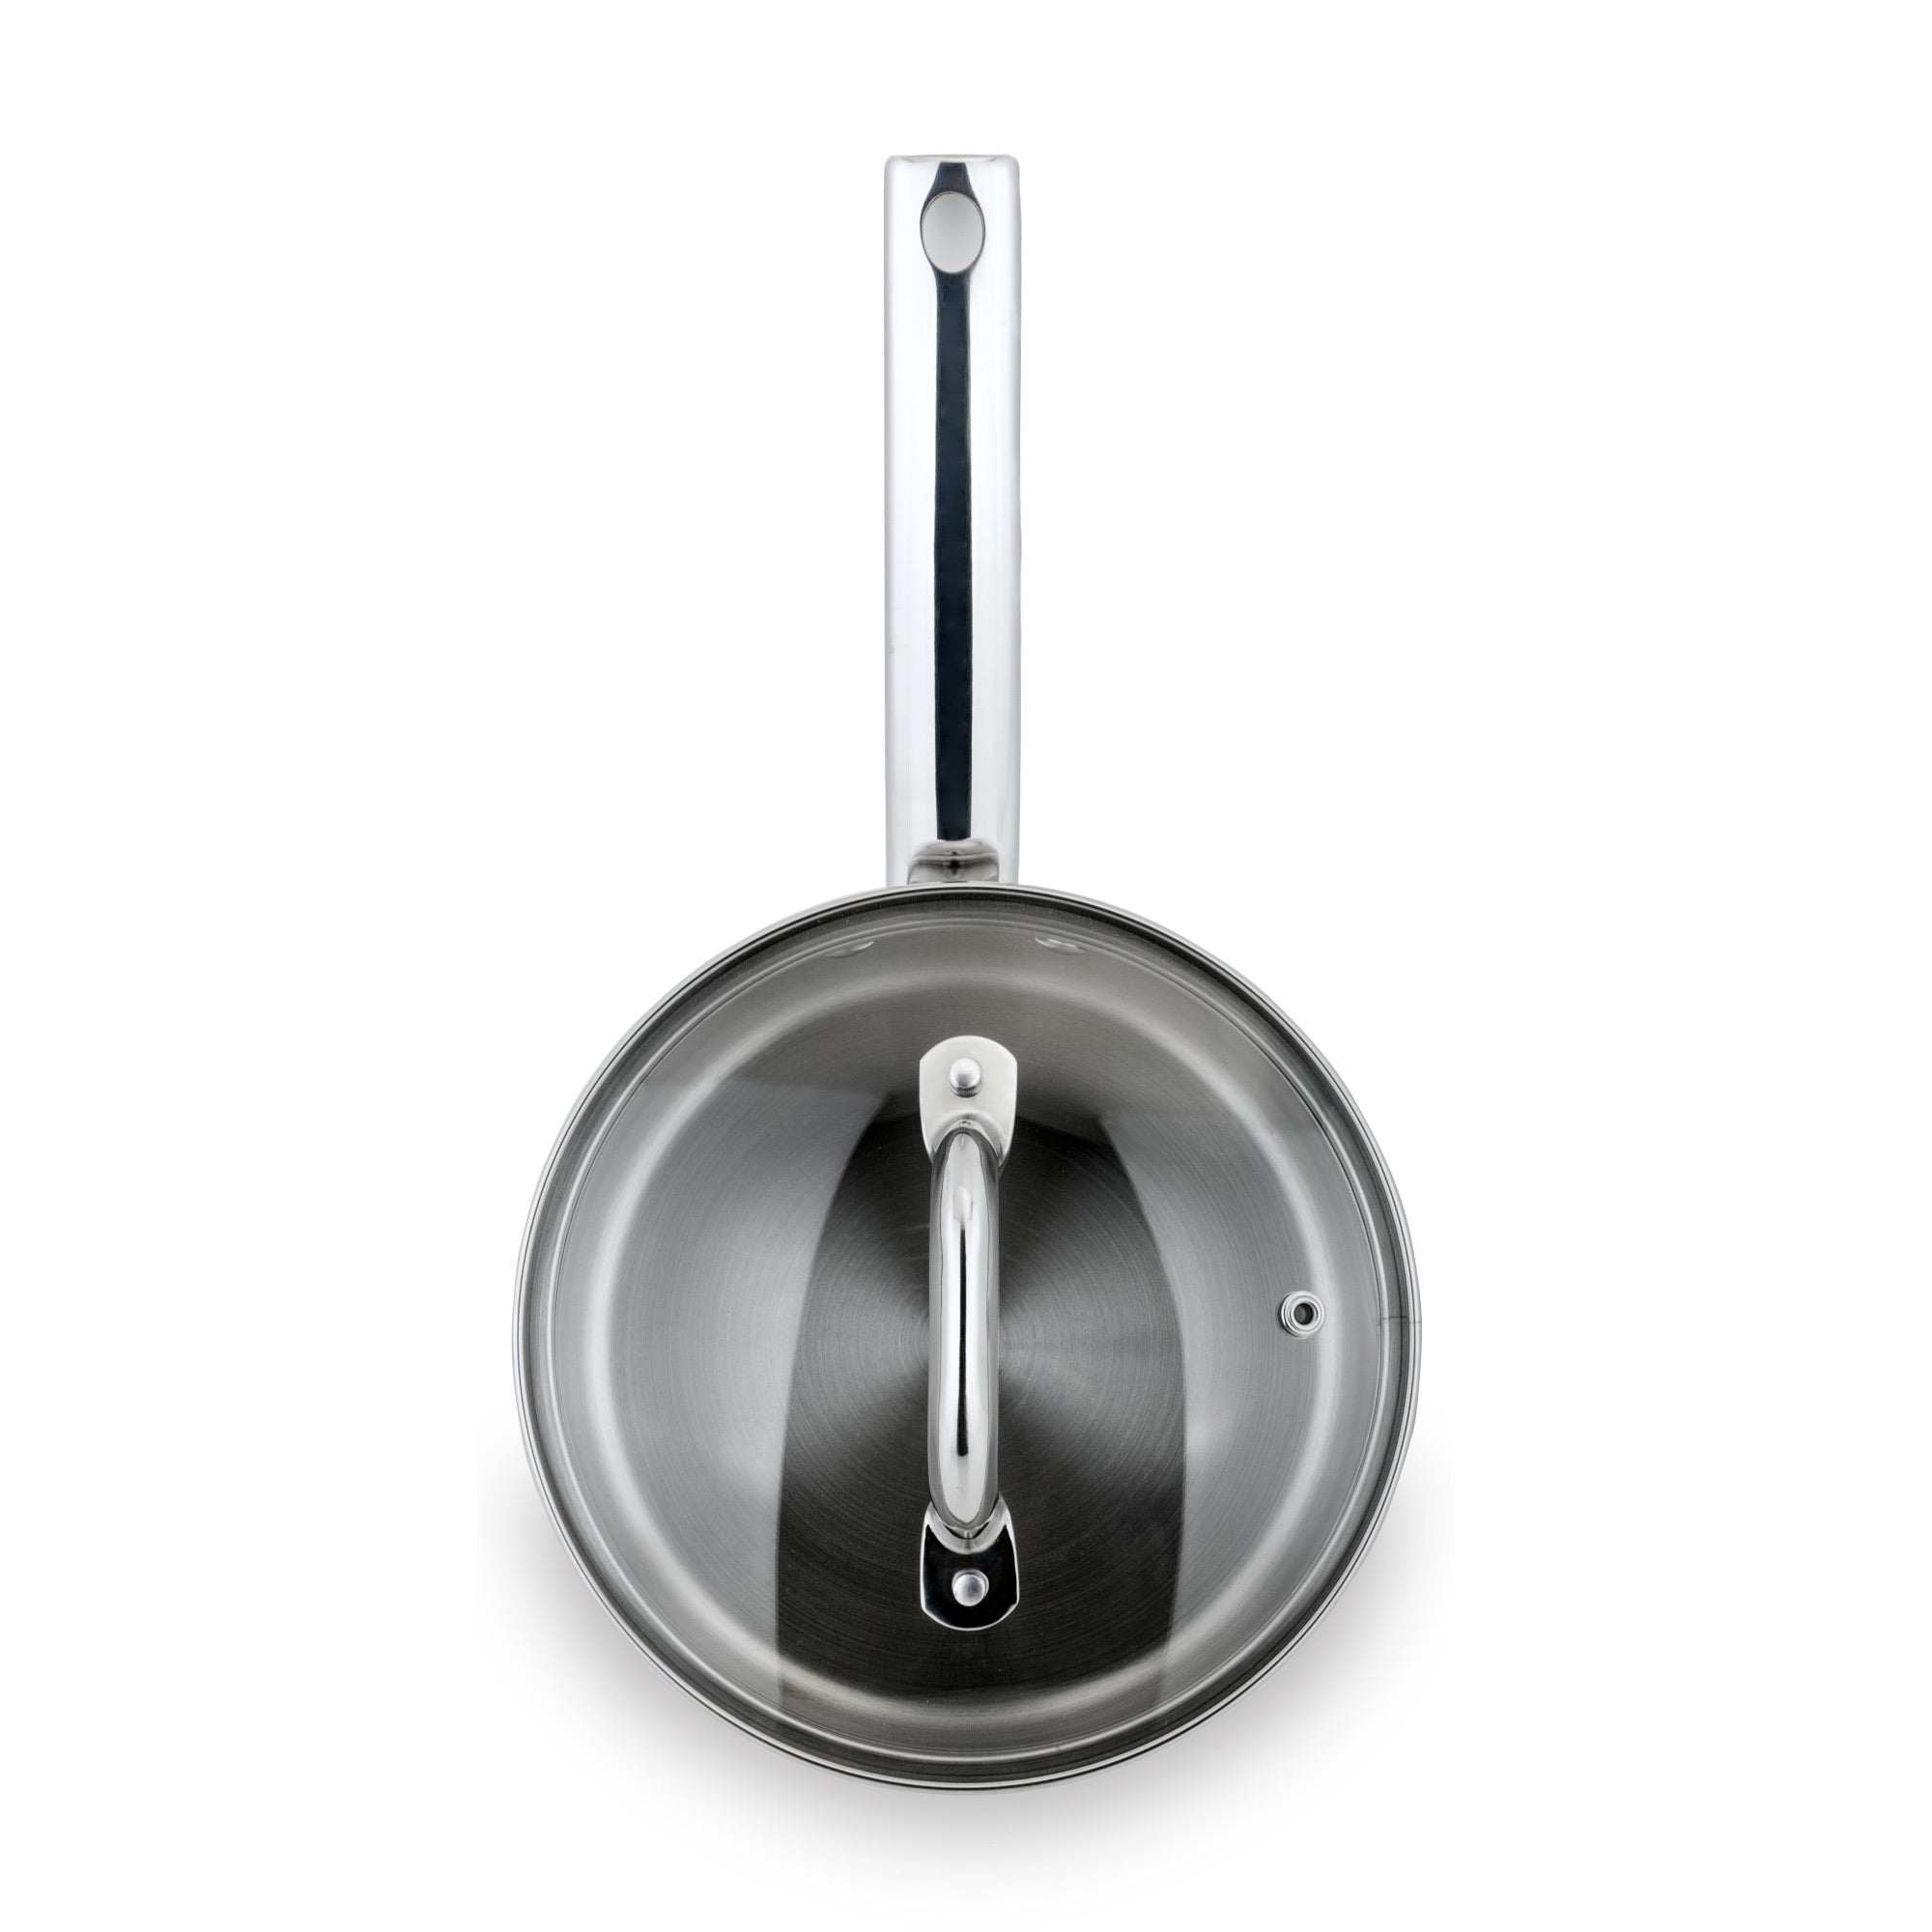 FRESHAIR™ RAPID BOIL 2.5 QT. STAINLESS STEEL TEA KETTLE, TIME-AND-ENER –  Turbo Pot